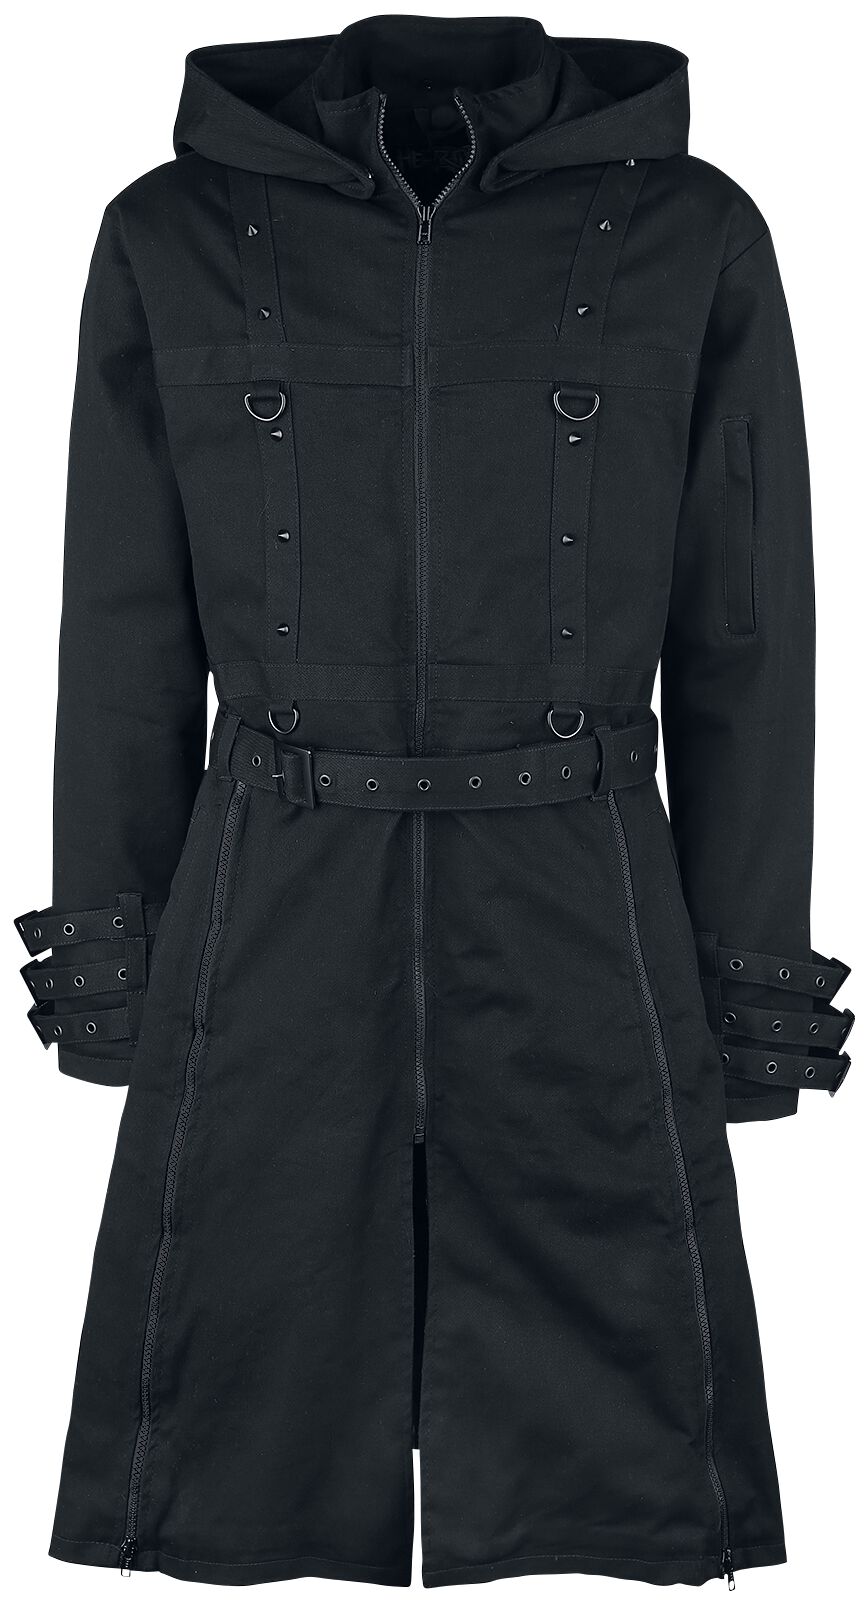 Heartless Tarquin Coat Coats black